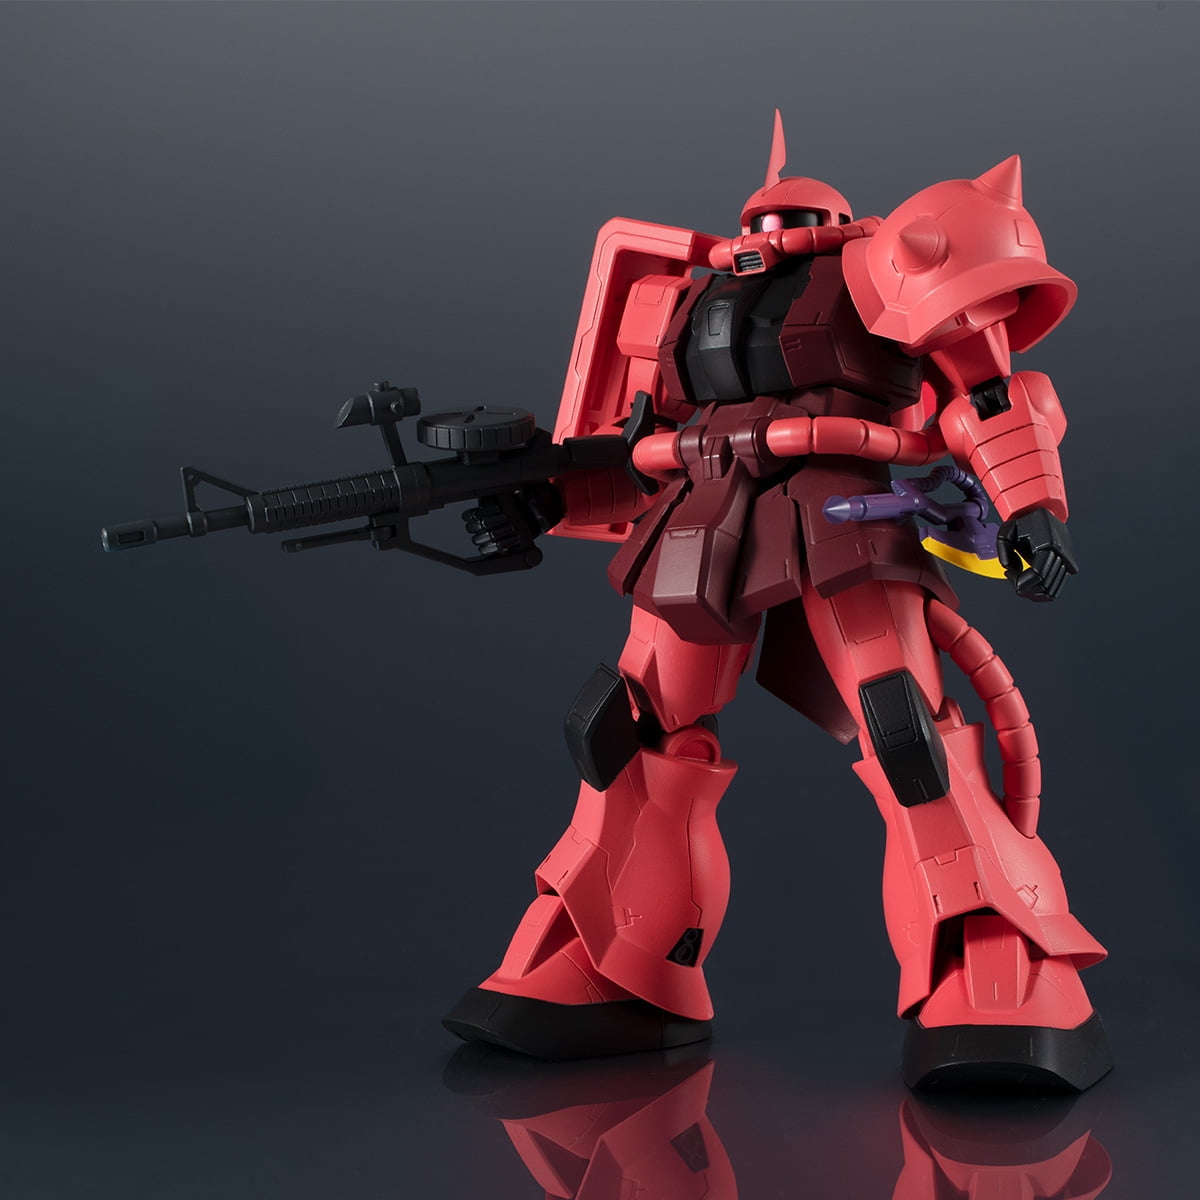 Mobile Suit Gundam 1/60 Ms-06s Char Custom Zaku II Plastic Model Bandai for sale online 